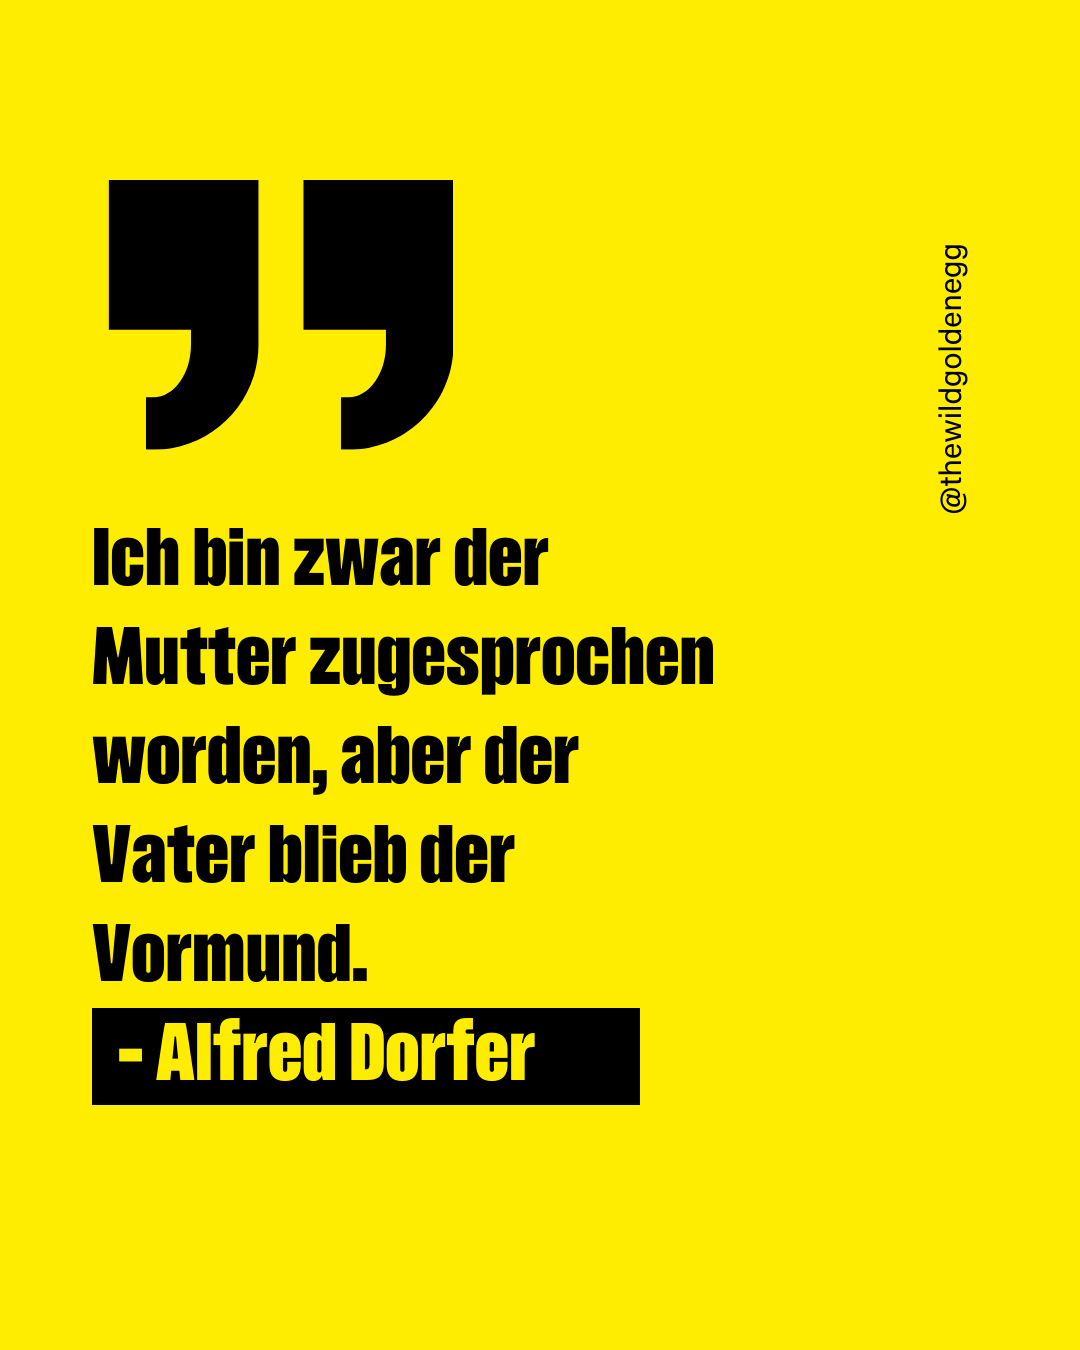 Alfred Dorfer